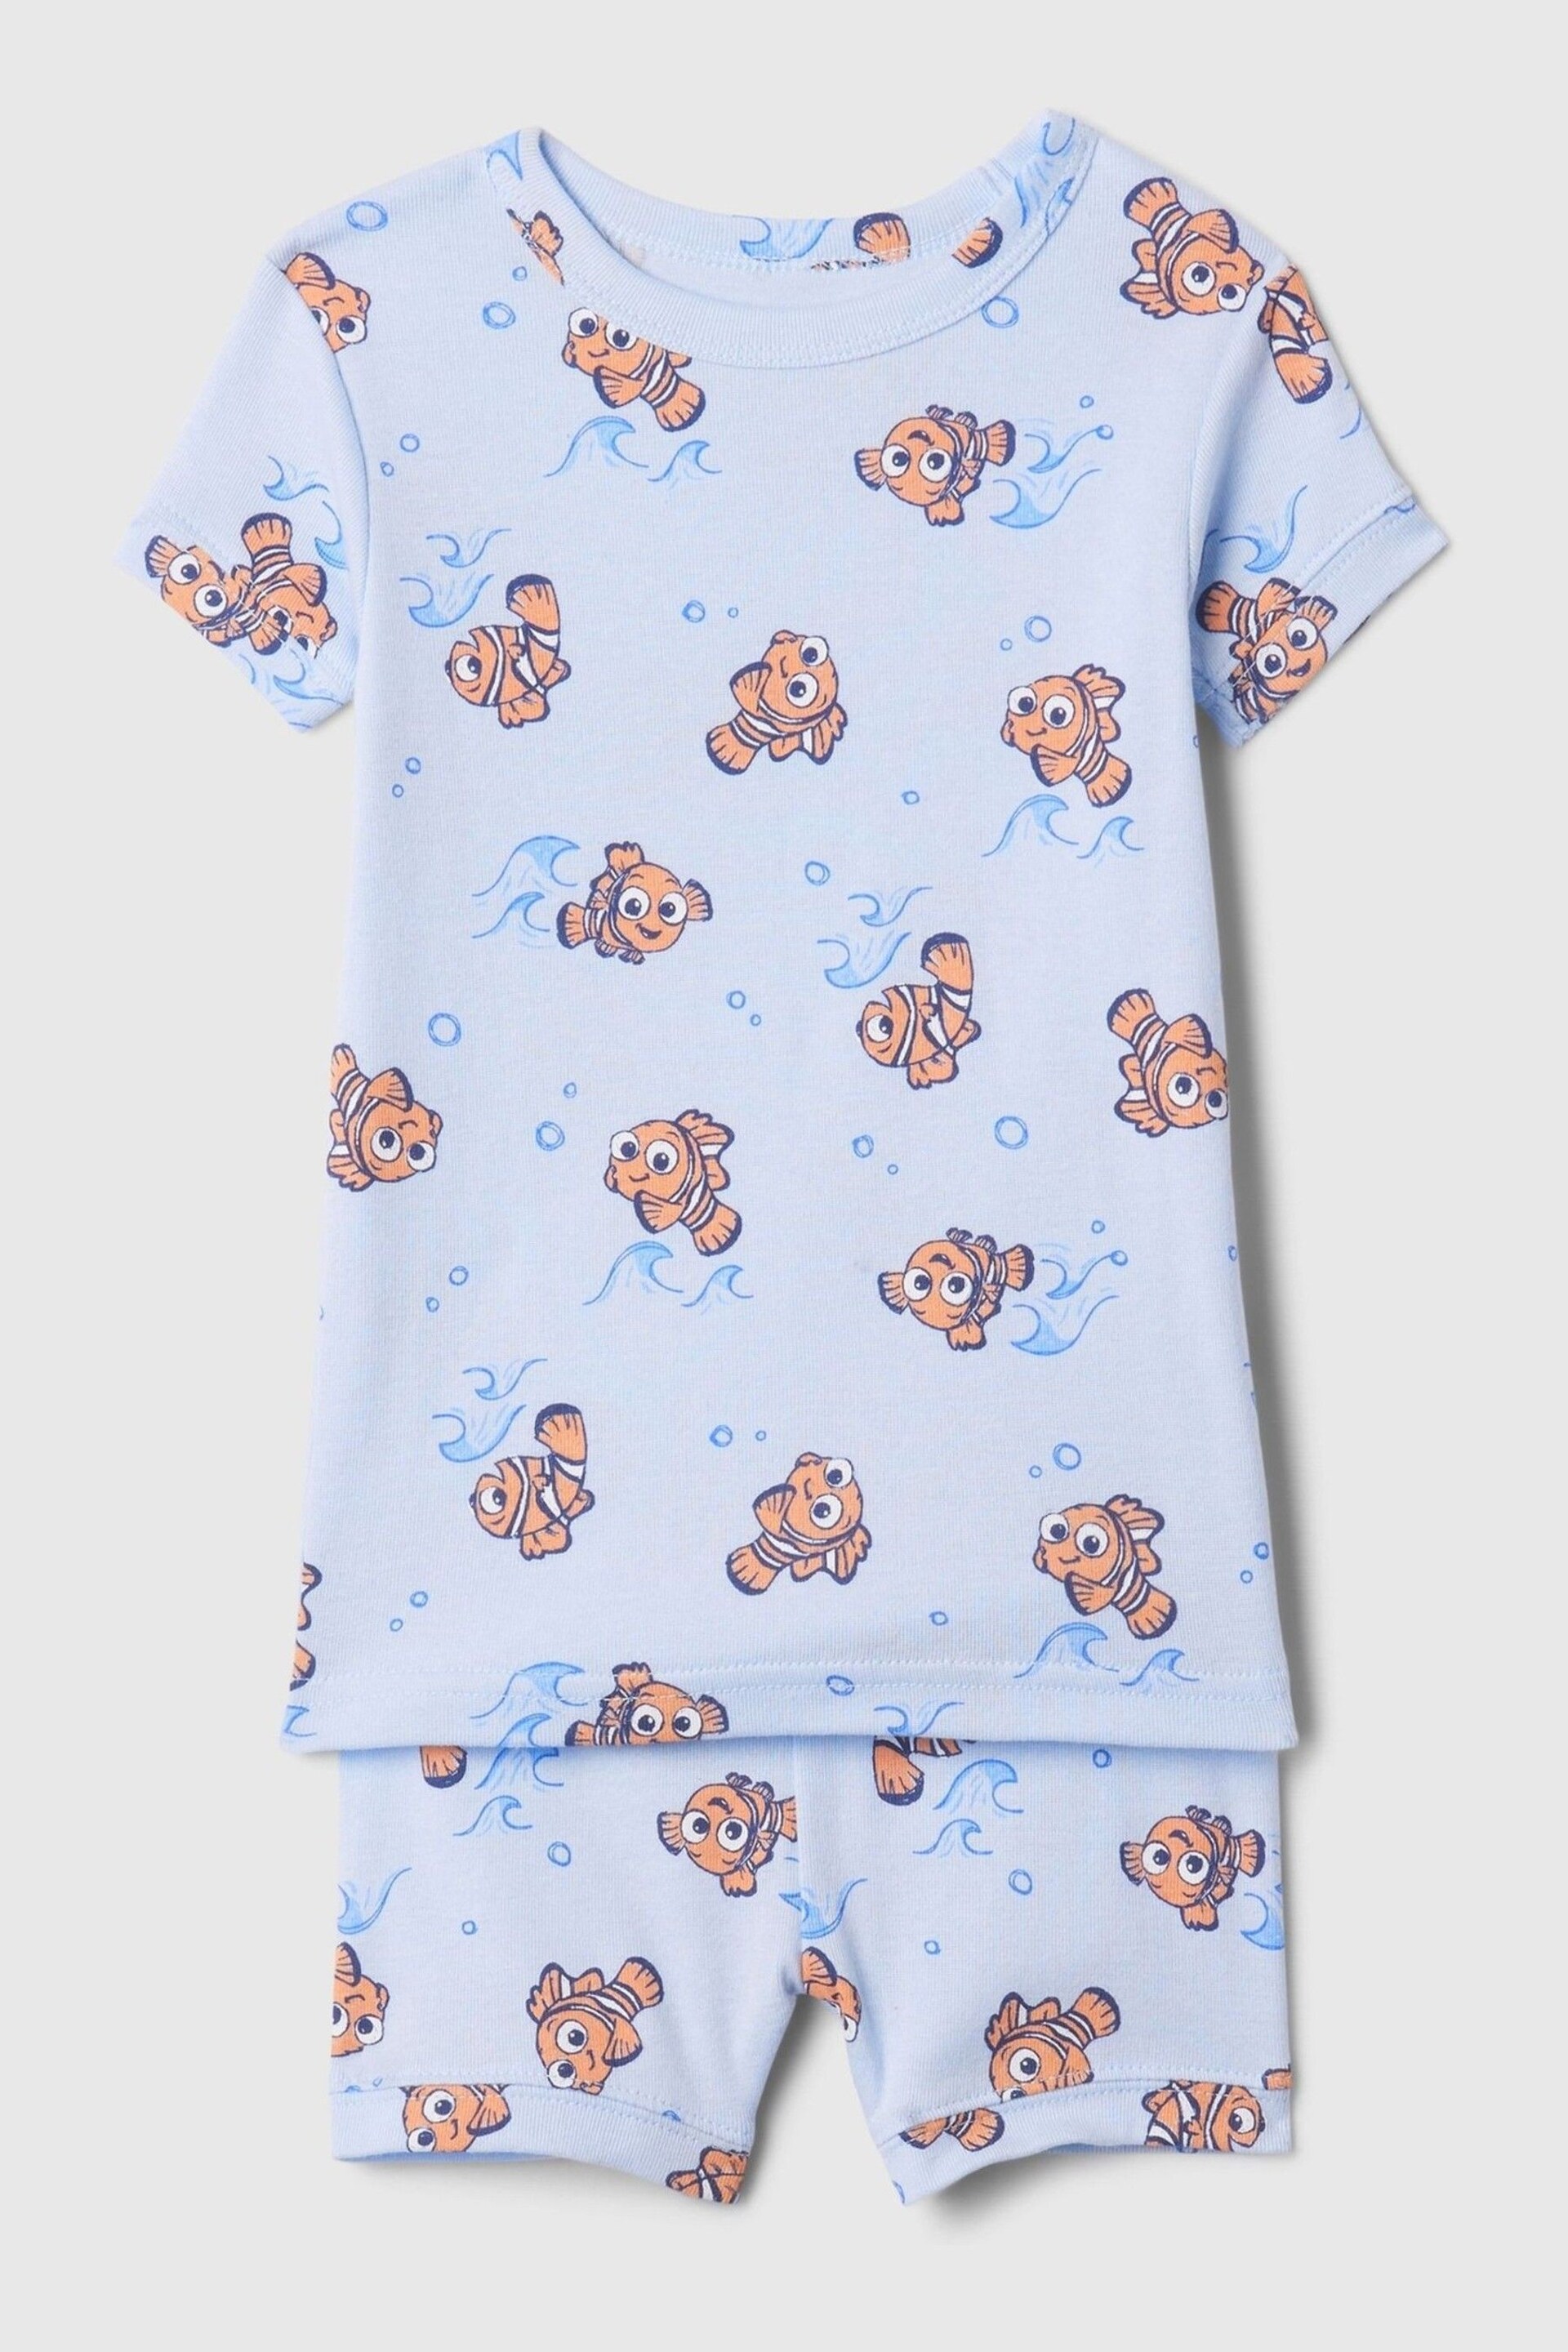 Gap Blue Disney Finding Nemo Organic Cotton Pyjama Set (6mths-5yrs) - Image 1 of 2